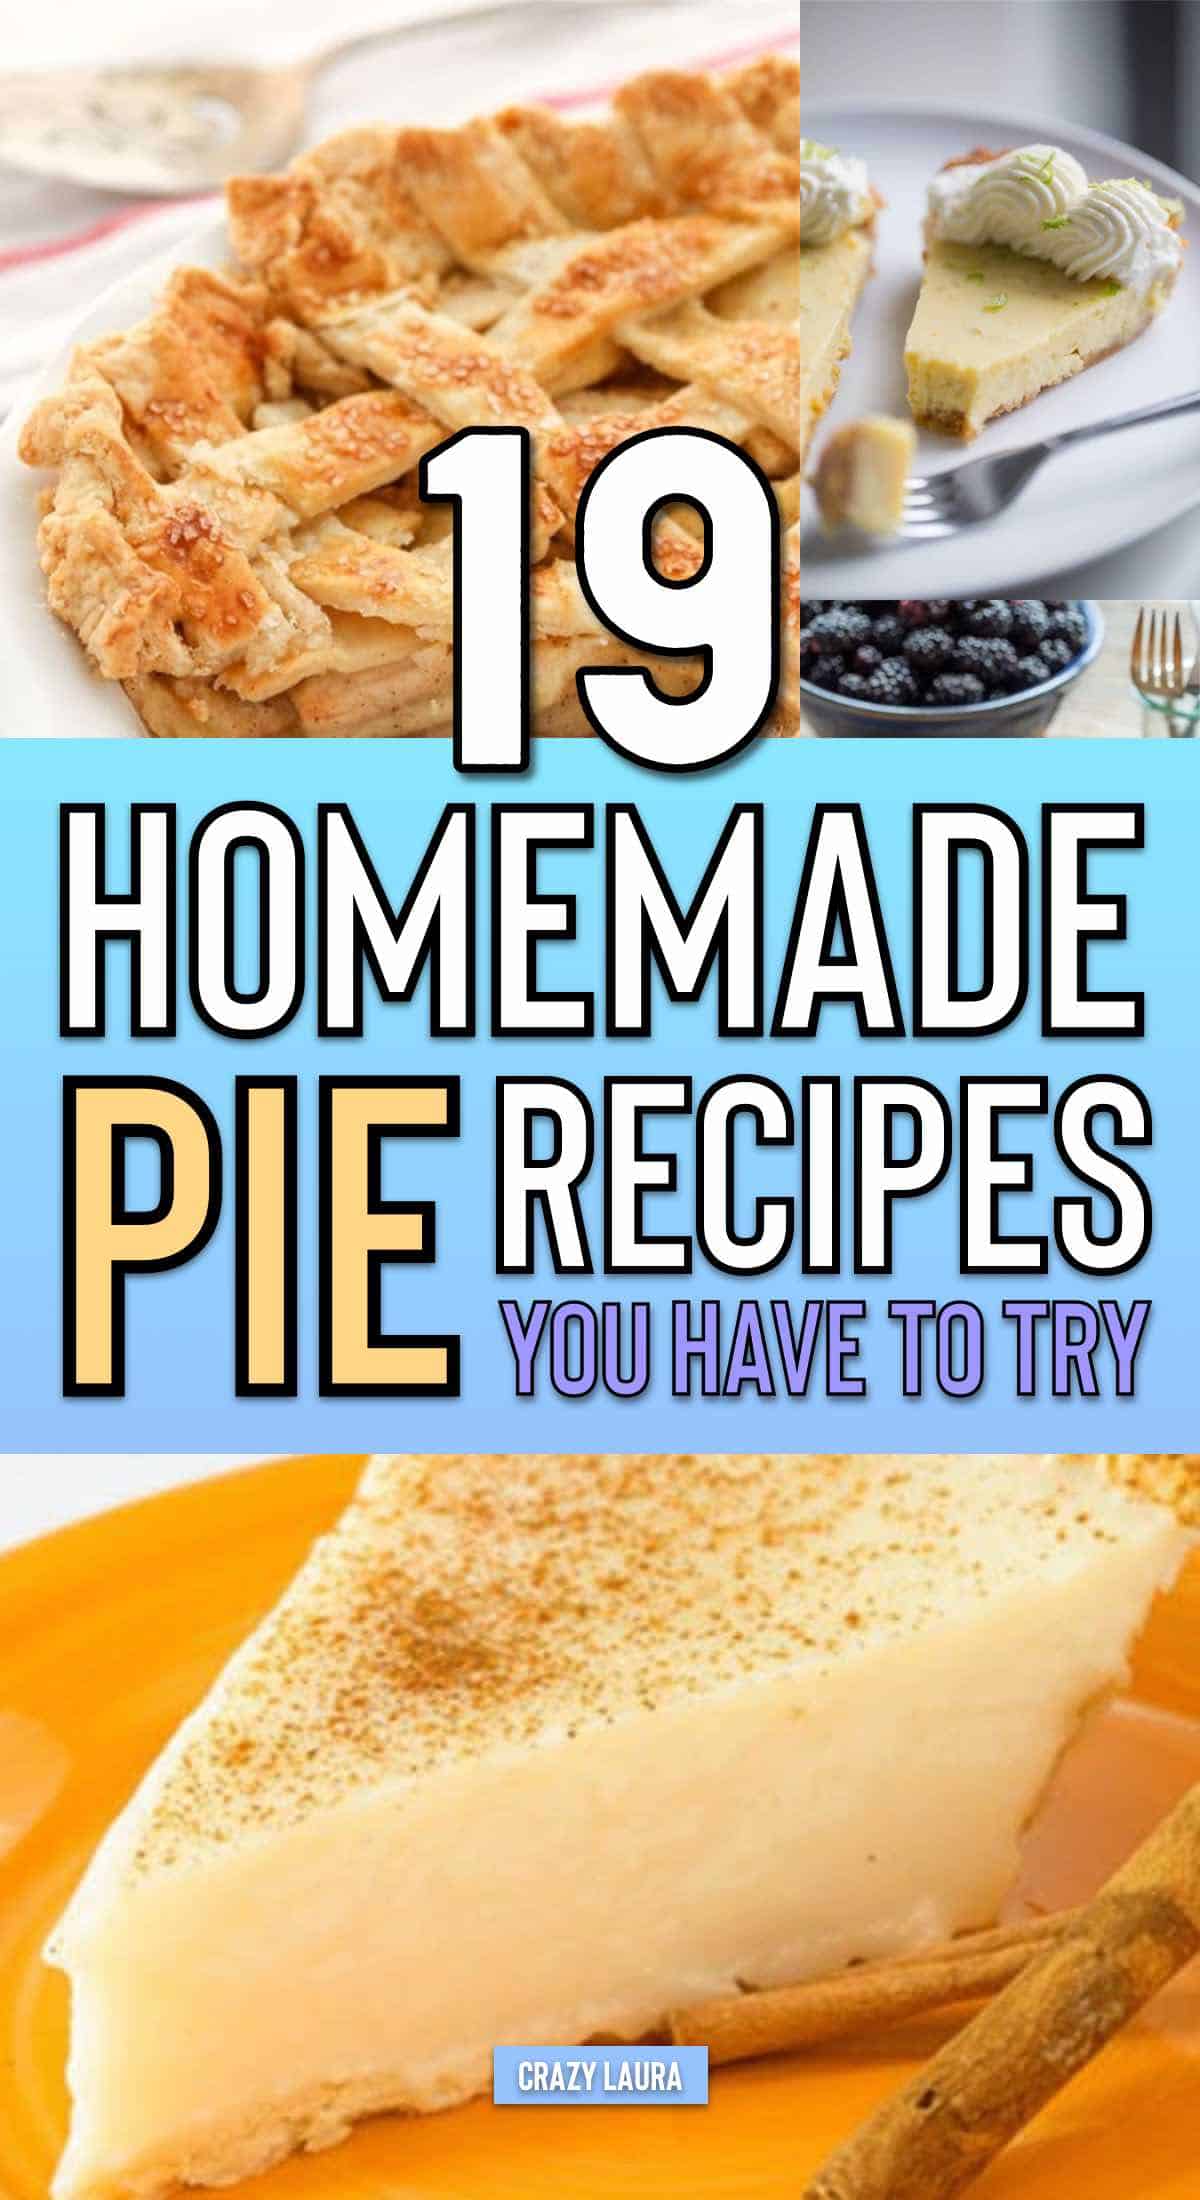 list of pie recipes